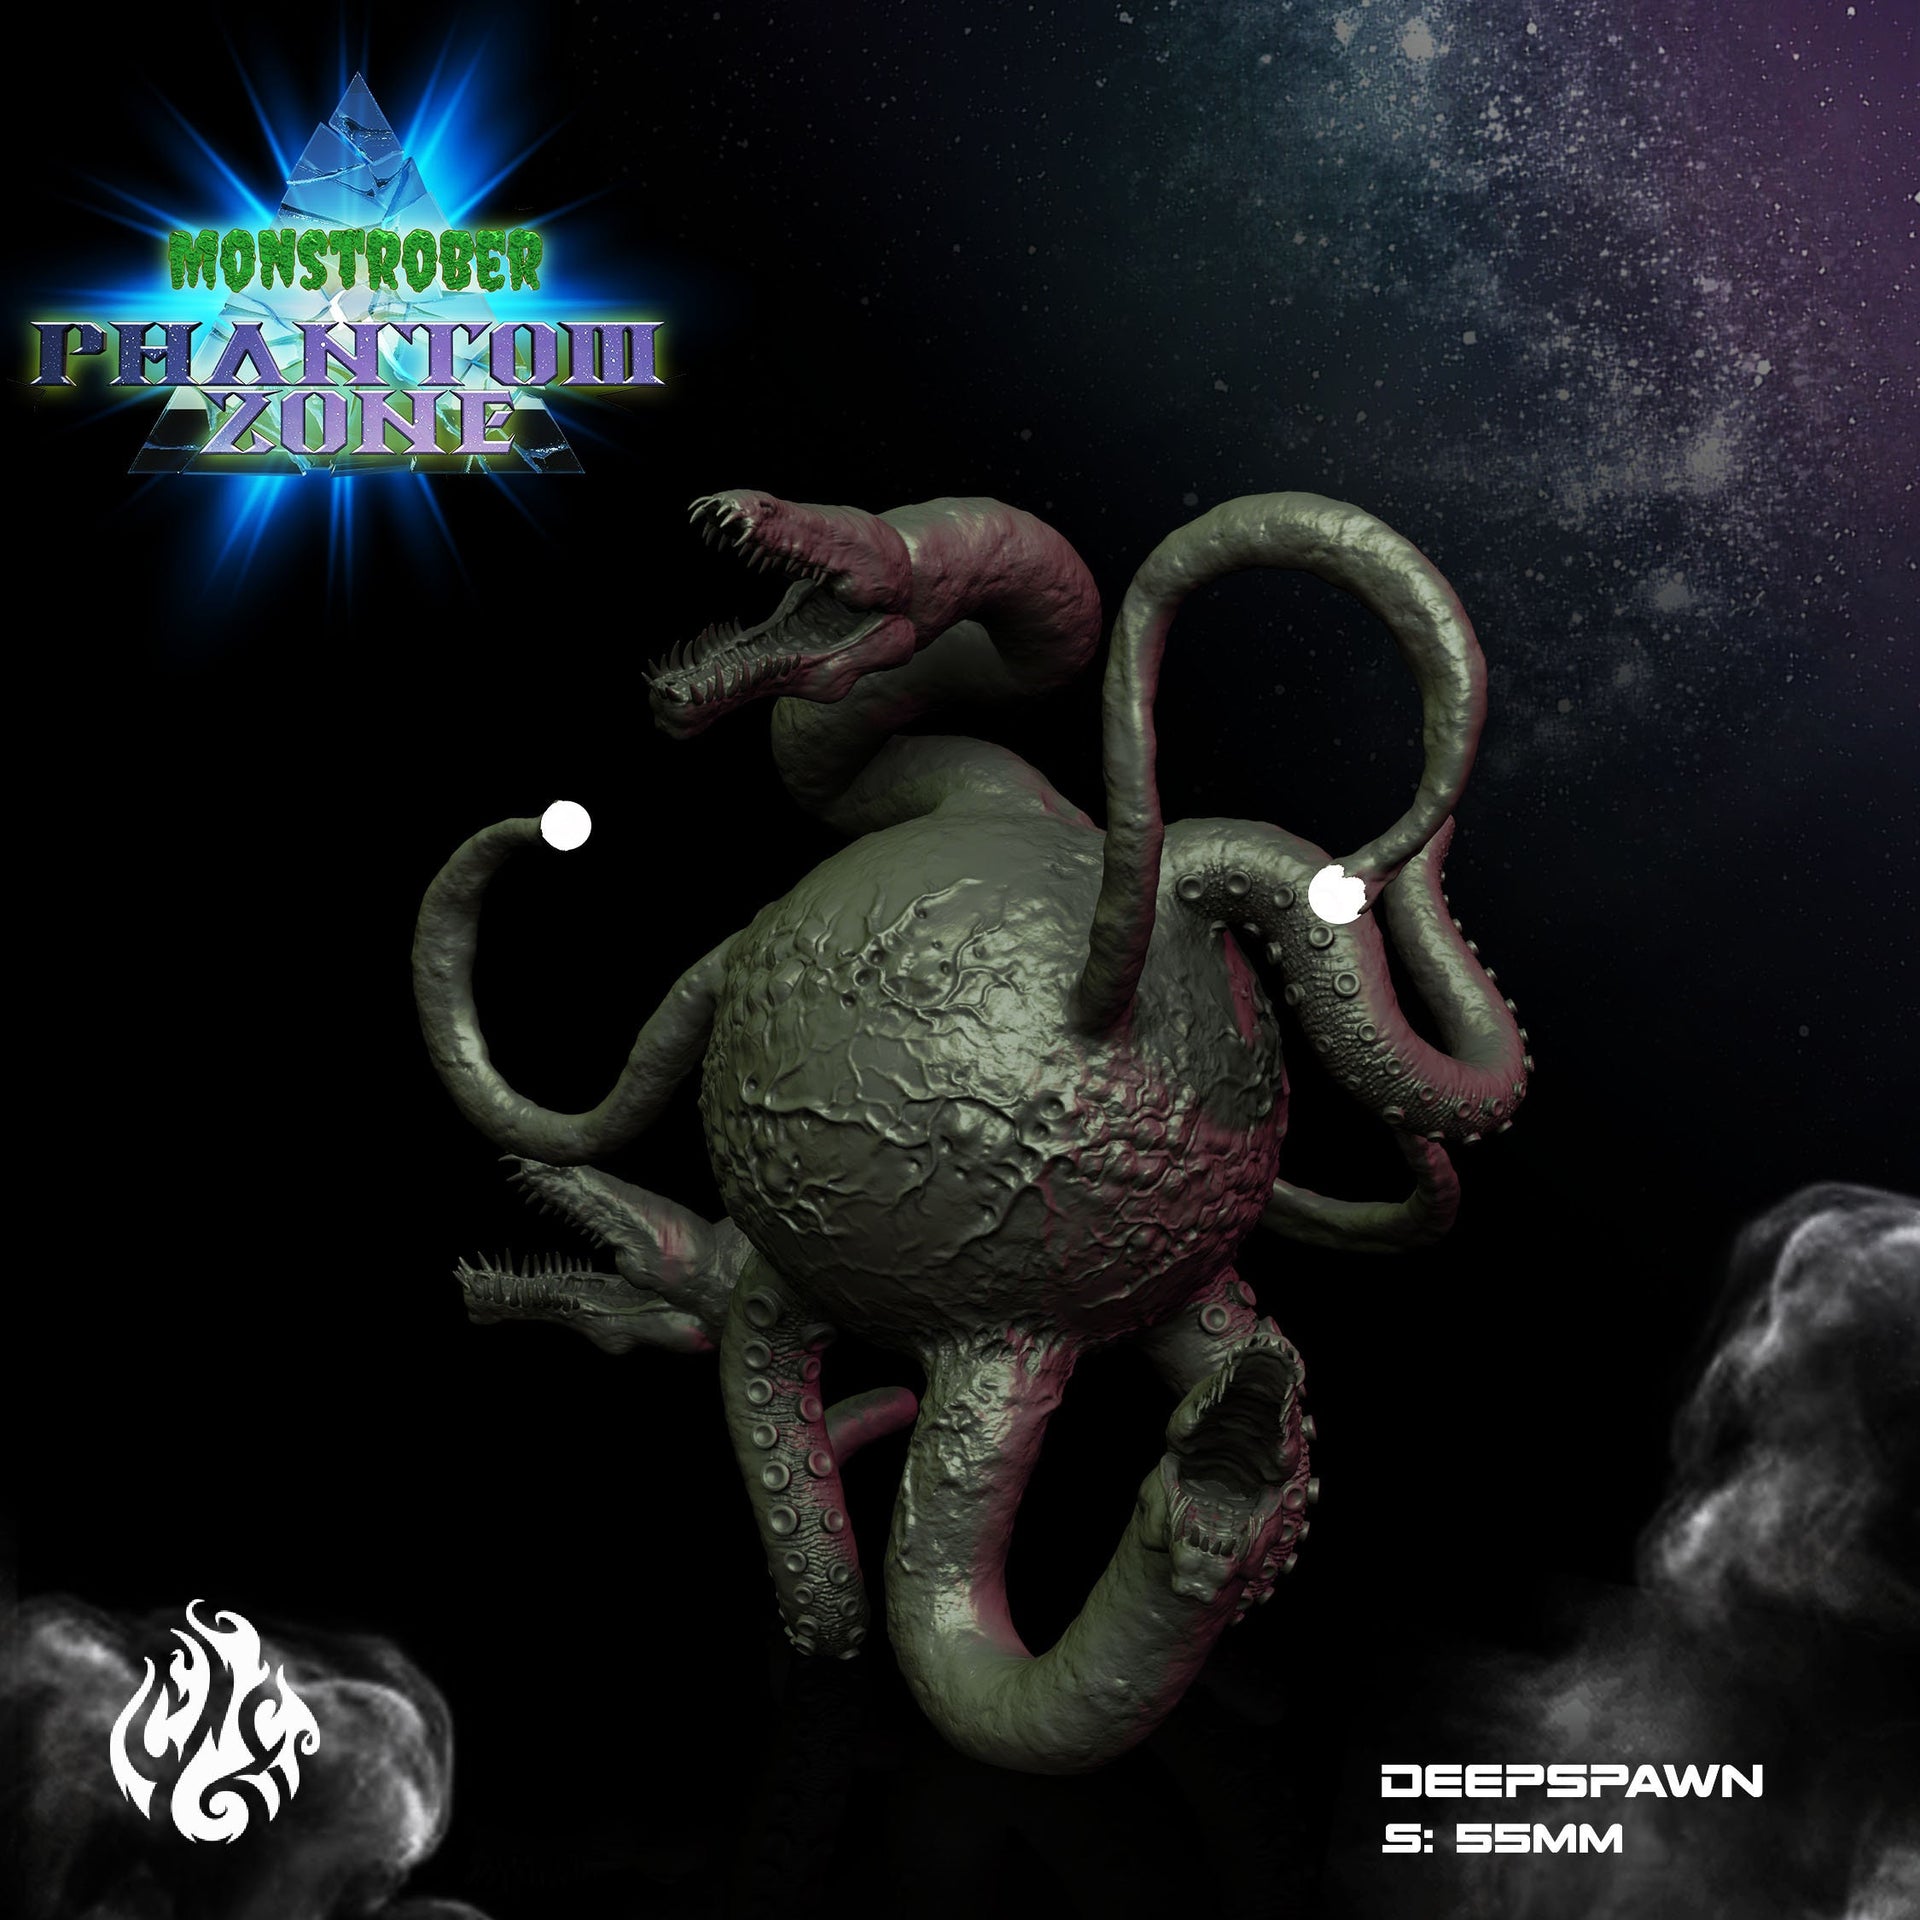 Deepspawn - Crippled God Foundry - Phantom Zone 